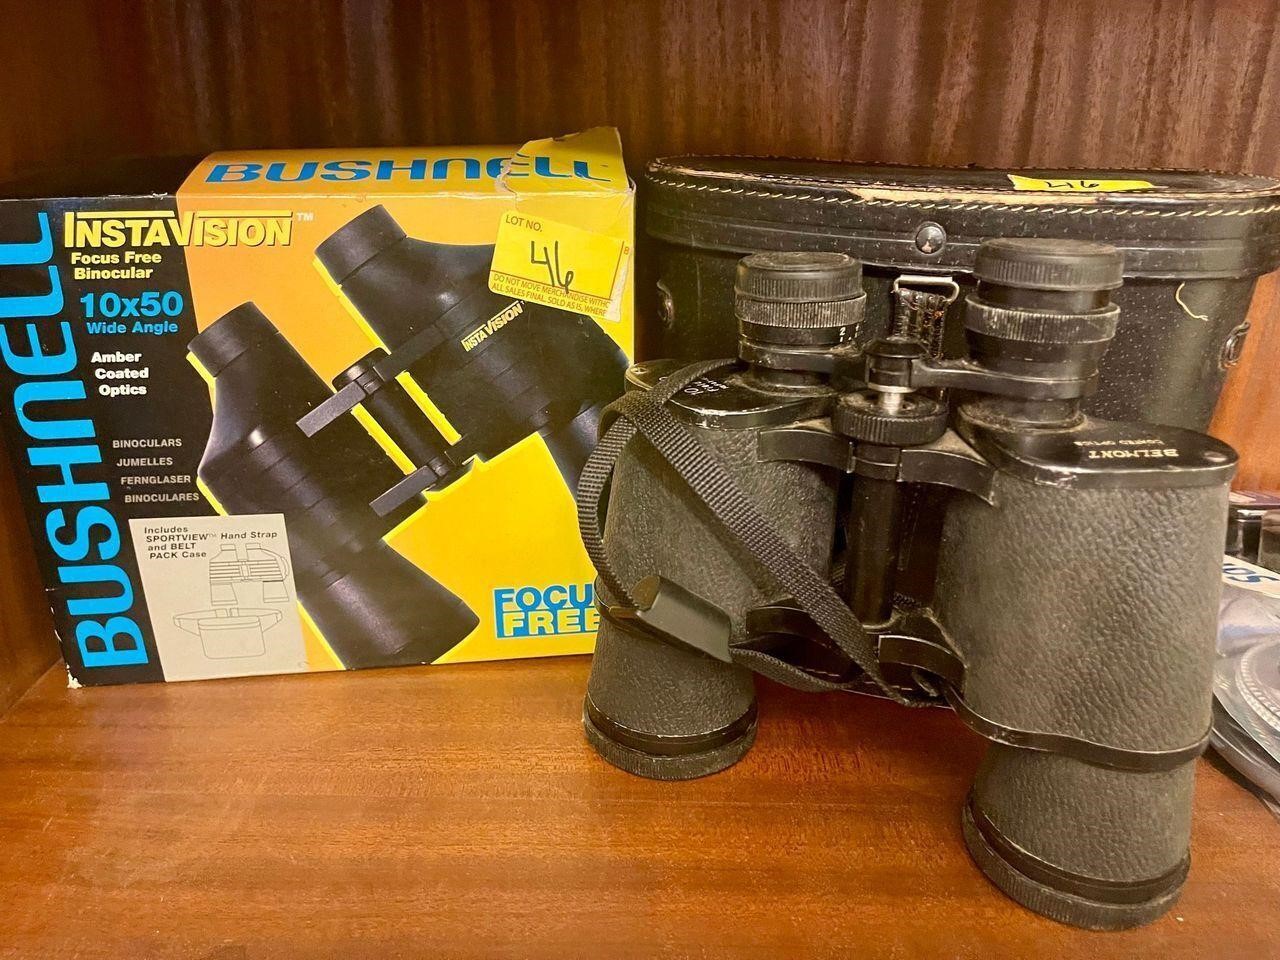 Bushnell instavision binoculars 10x50 wide angle